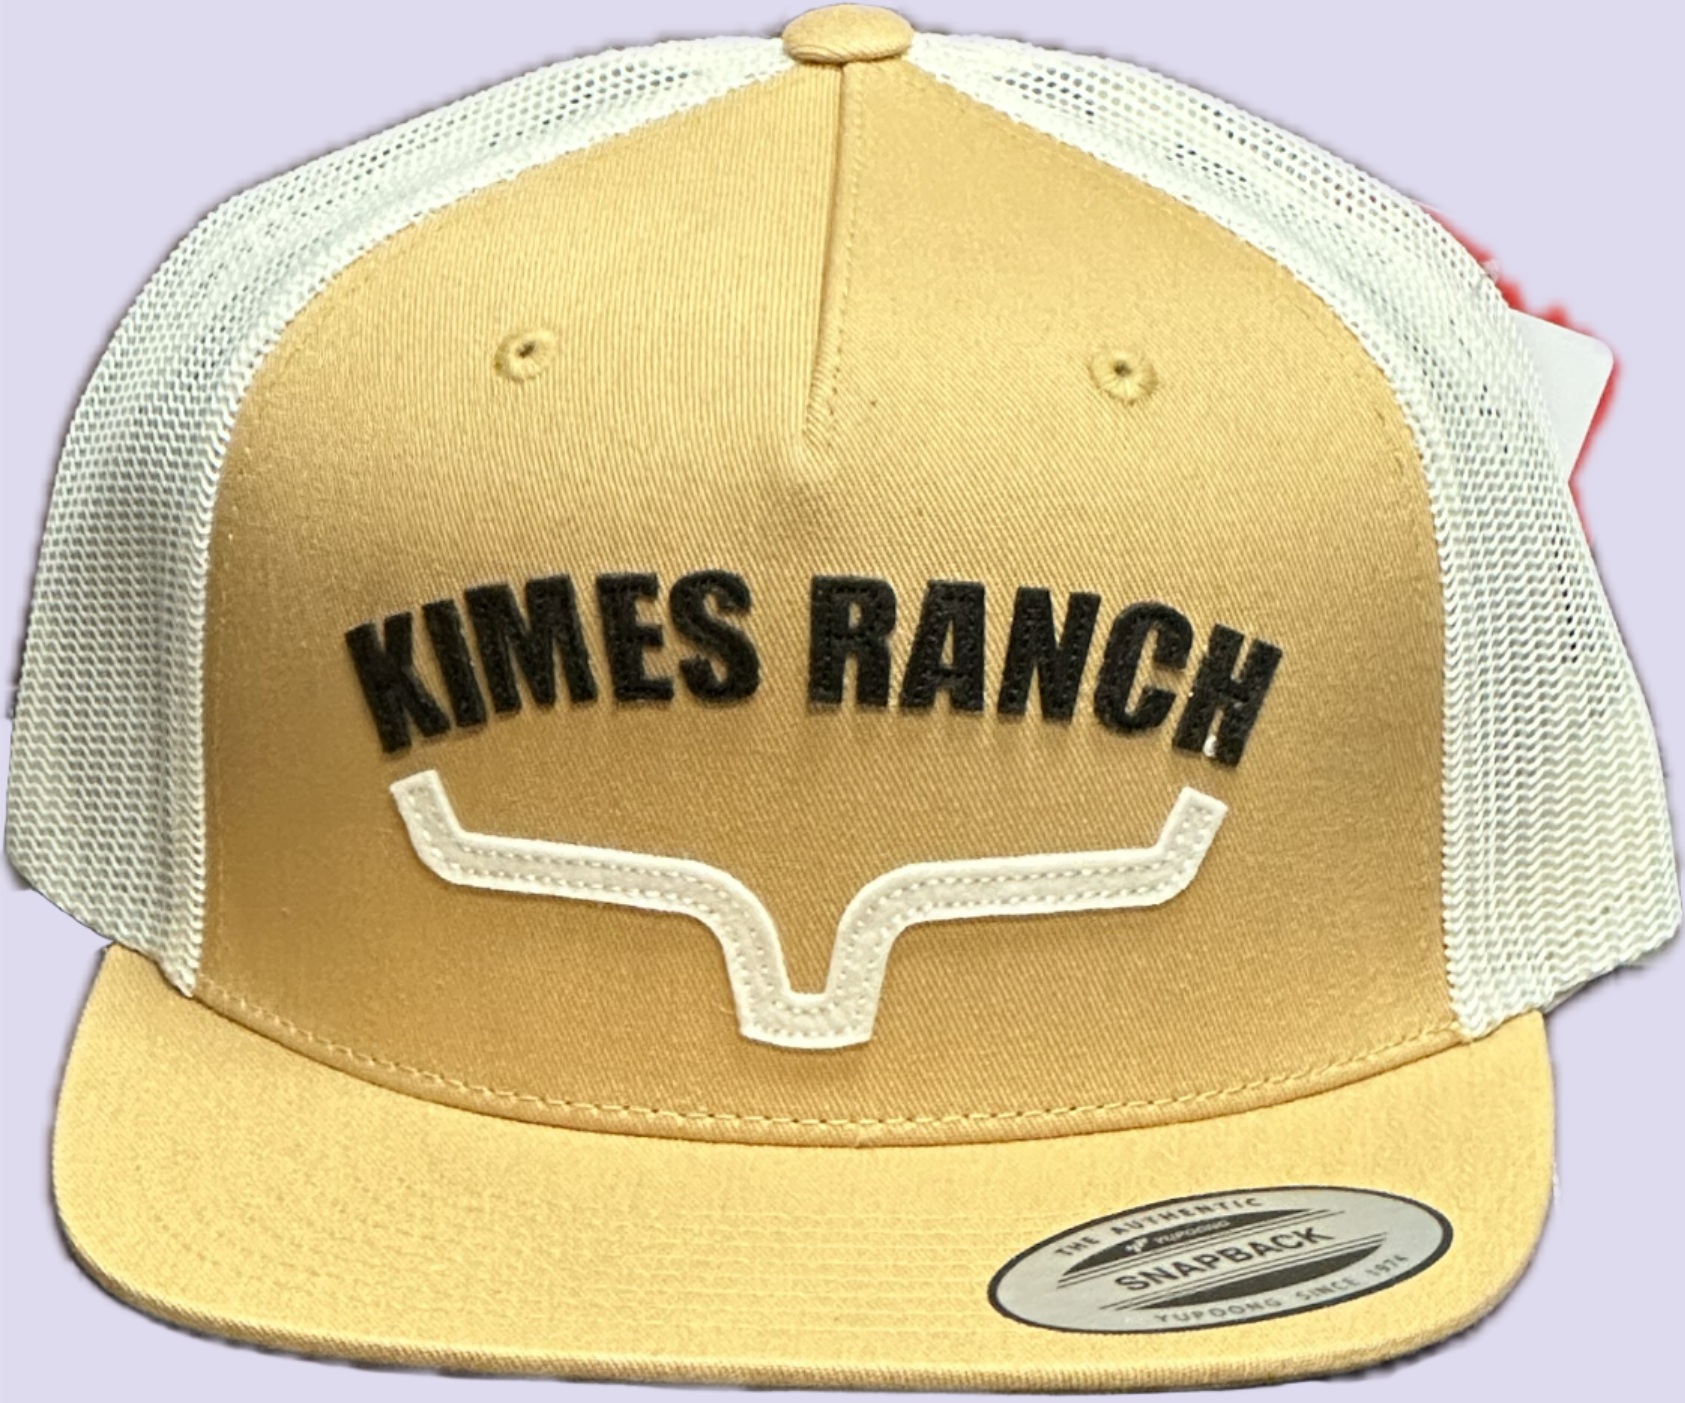 Kimes Ranch Flatlands Trucker - Brown